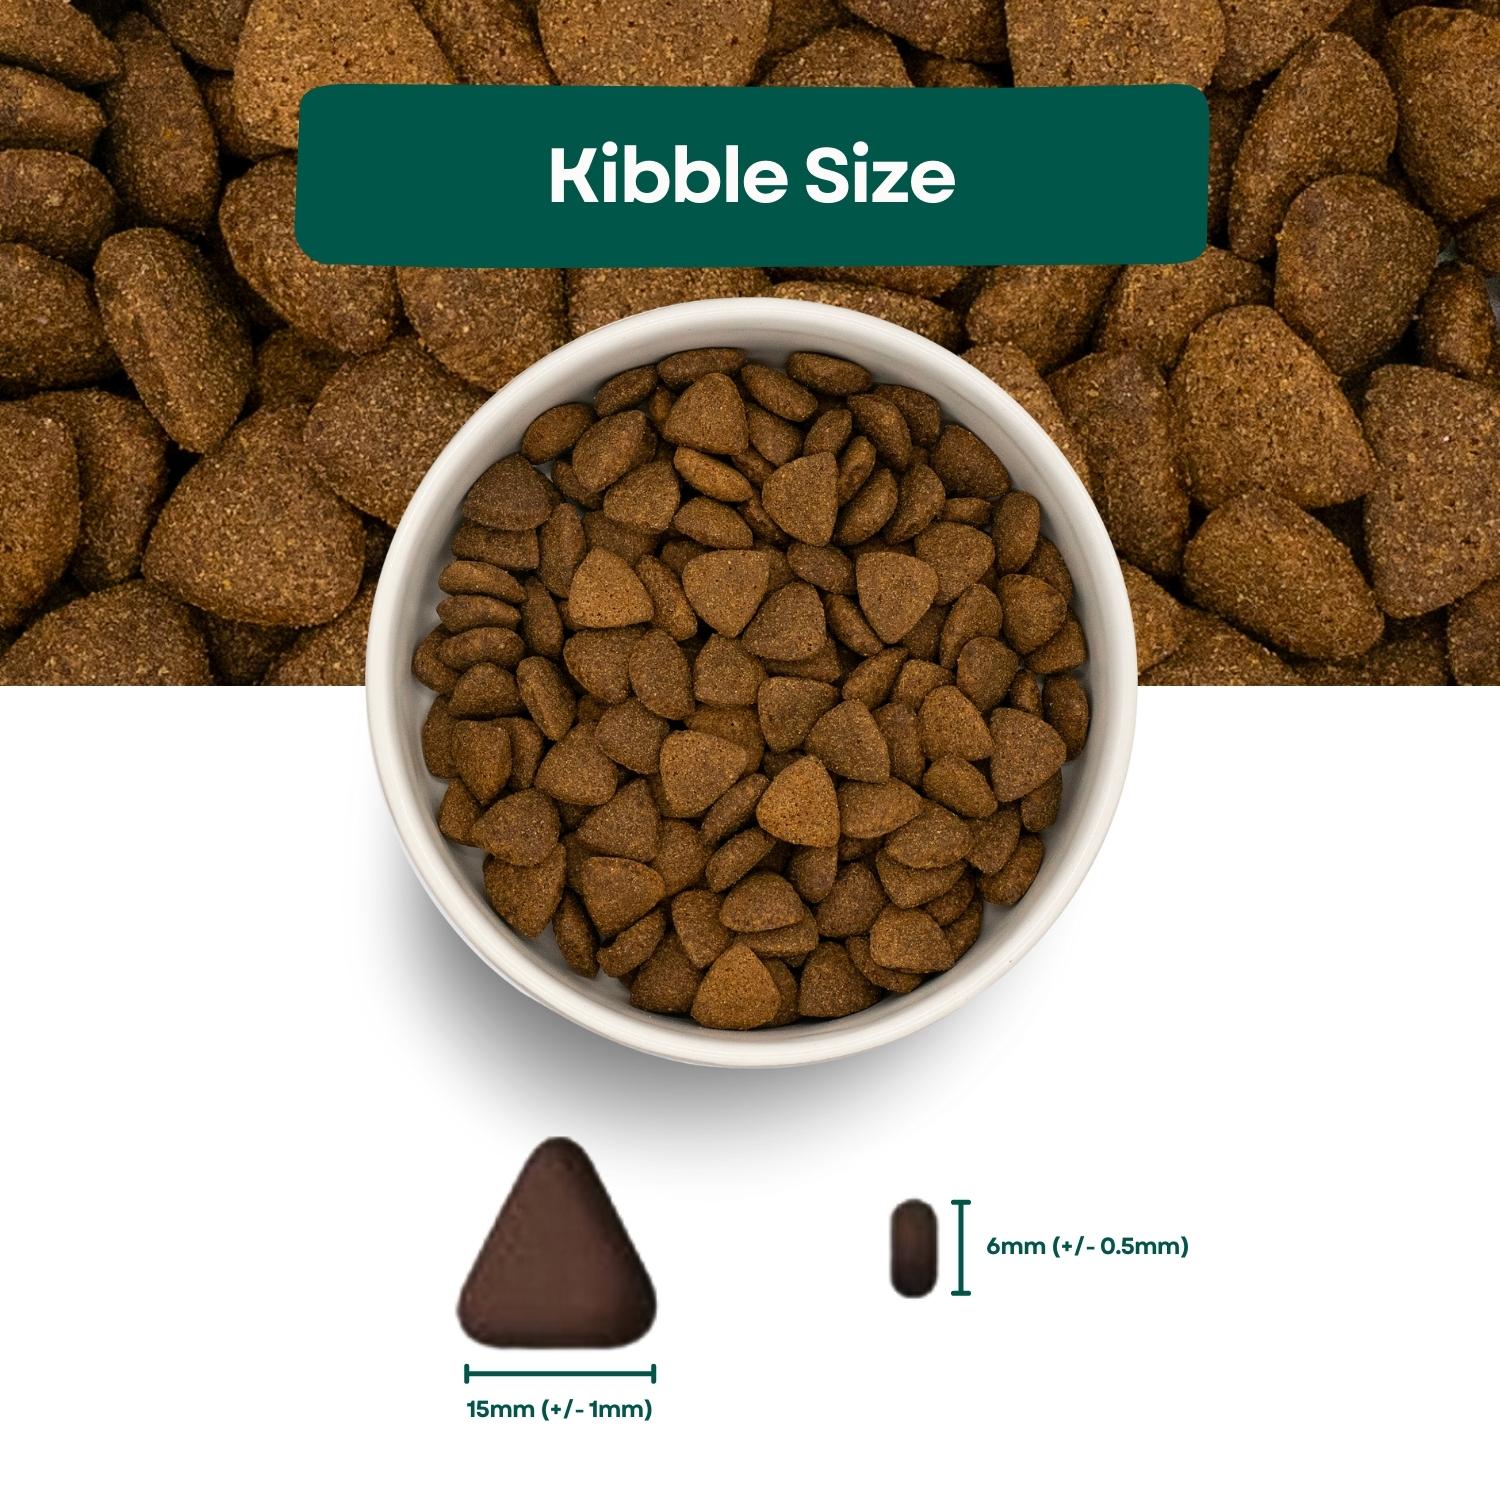 Kibble Size Superfood 65 Adult Dog Food - Angus Beef